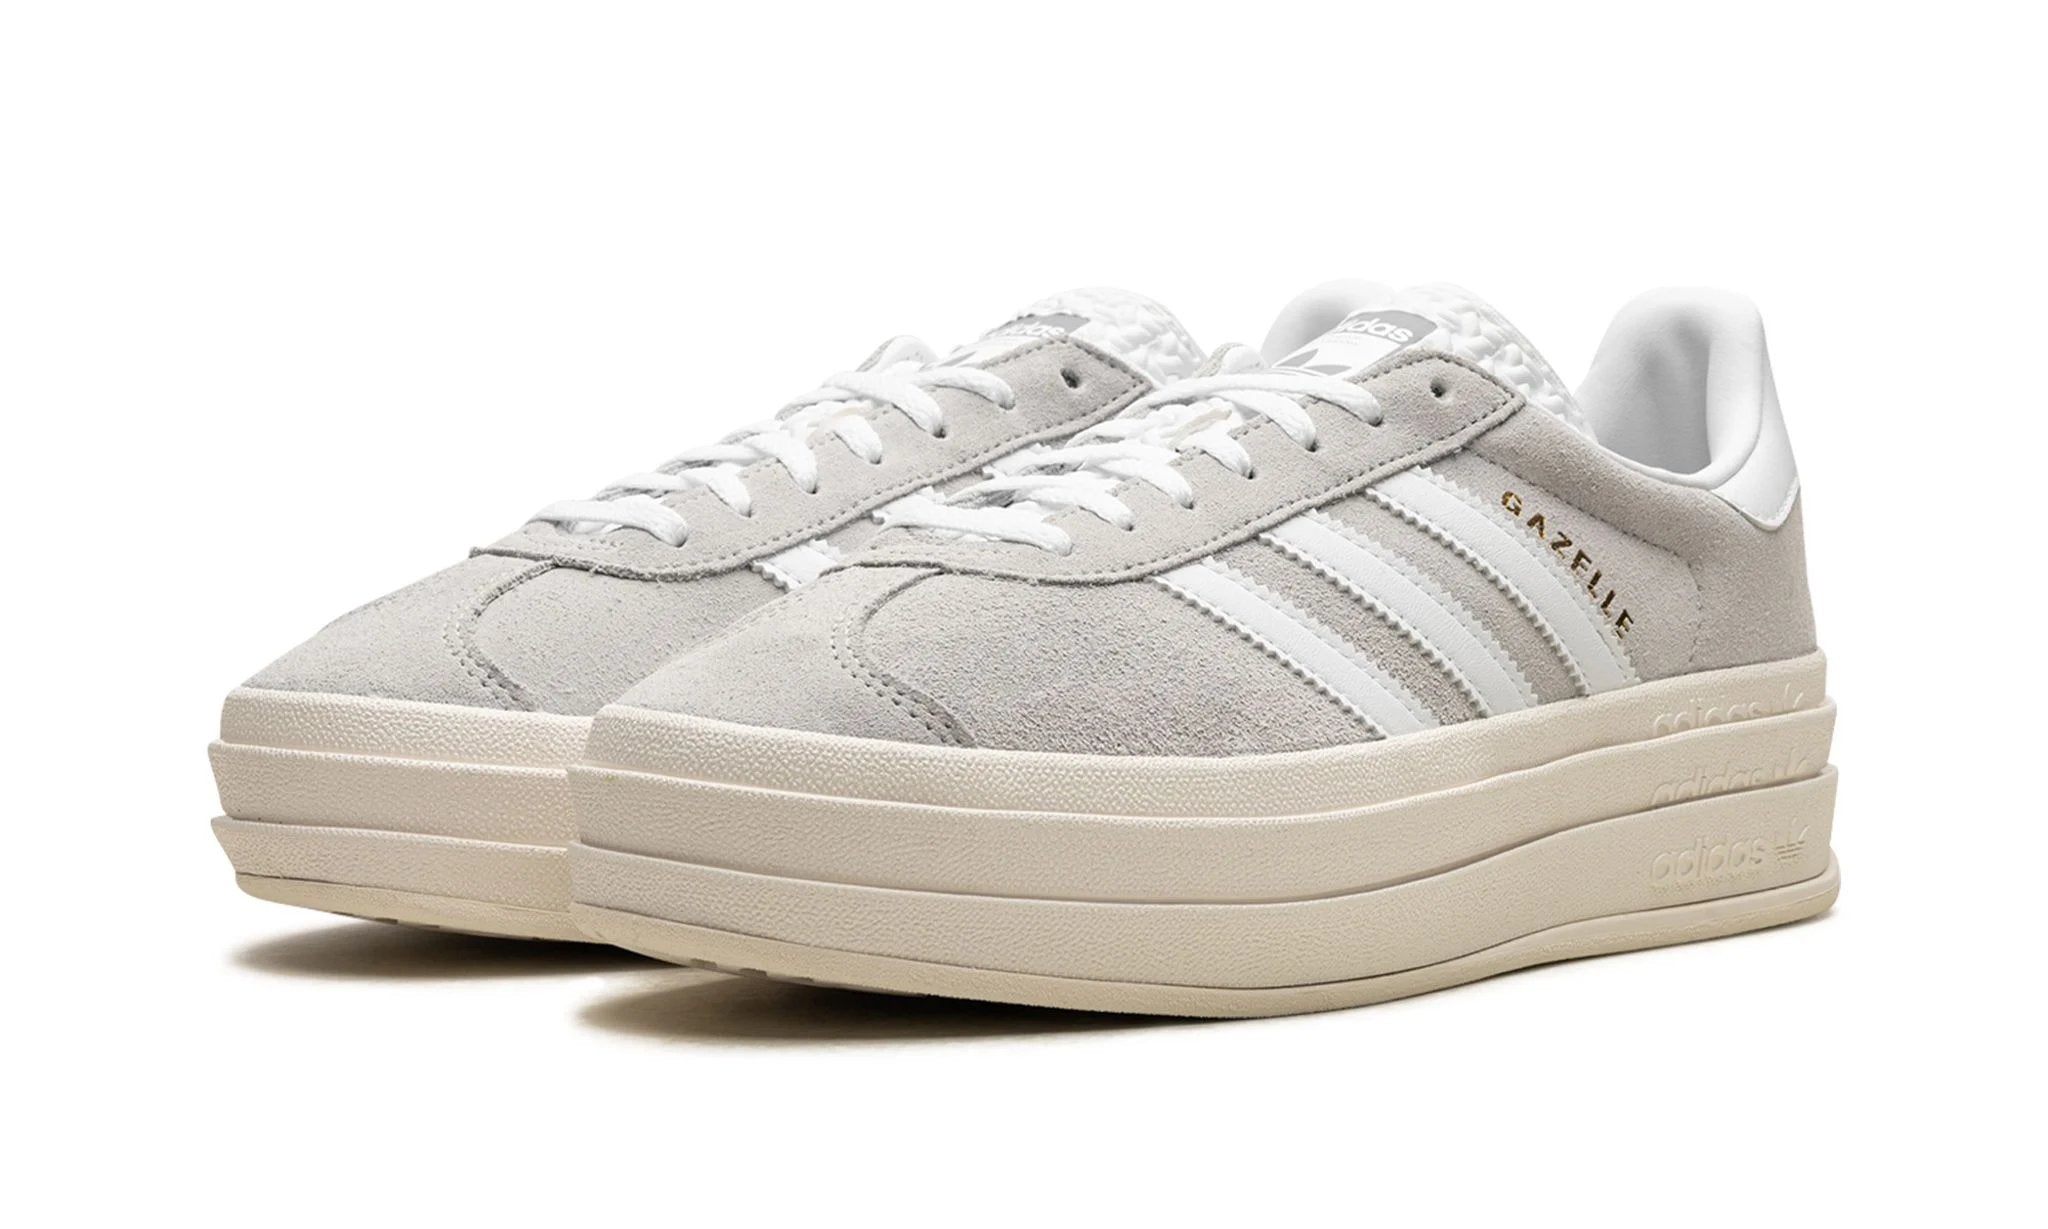 Adidas Gazelle Bold Grey White (Women's) - HQ6893 - Sneakers